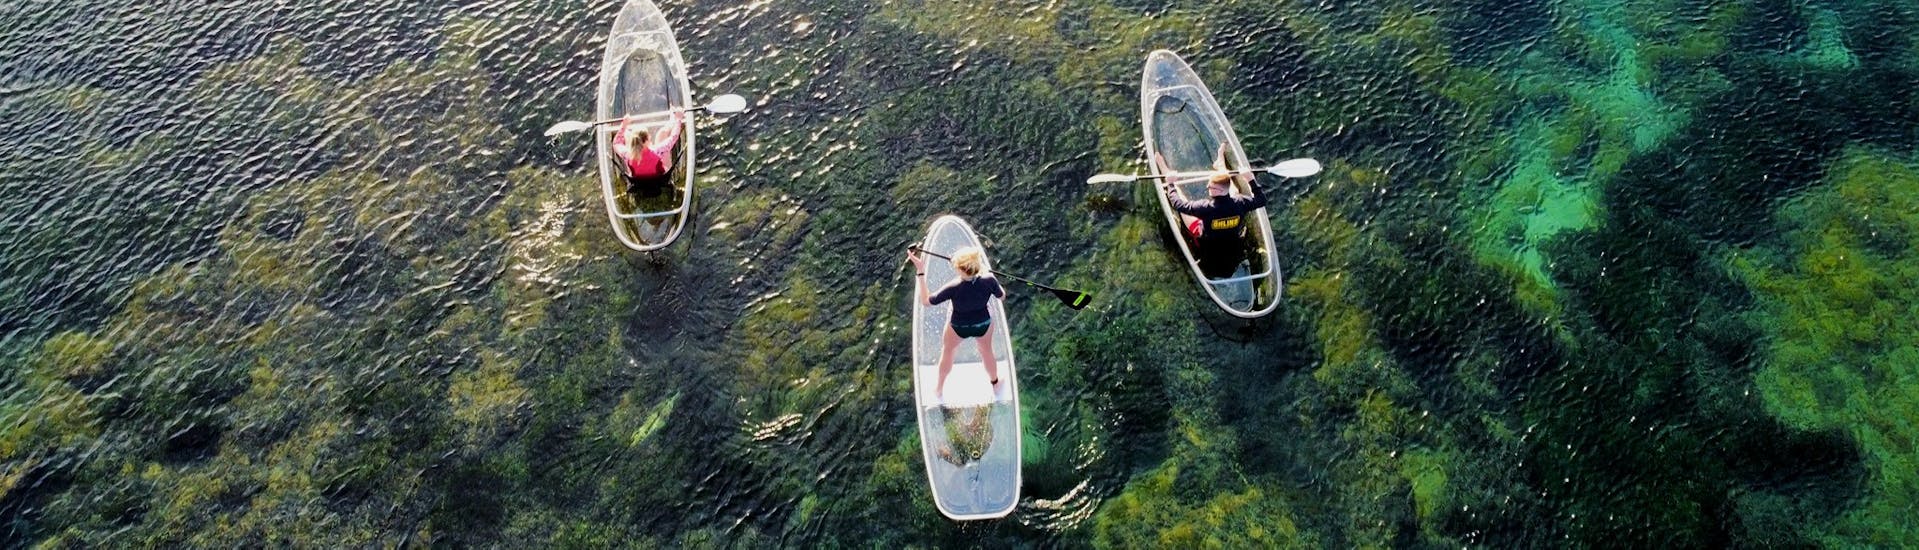 Kayak y piragua fácil en Bormes-les-Mimosas - Côte d'Azur (Costa Azul).